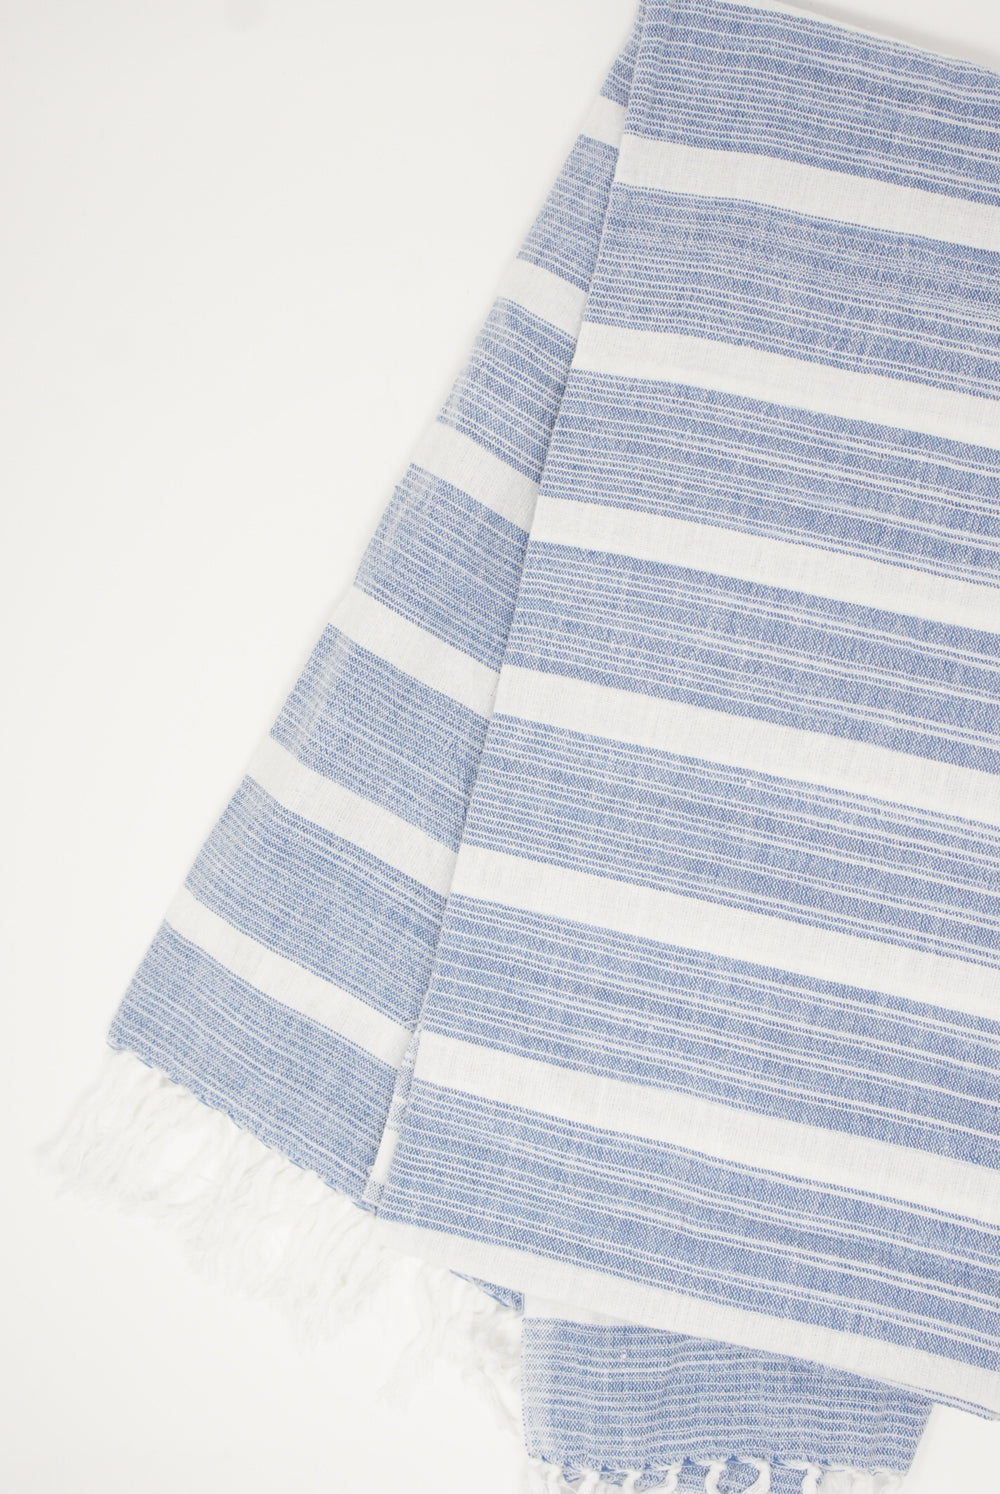 Auntie Oti Towel in Blue/White Stripe detail